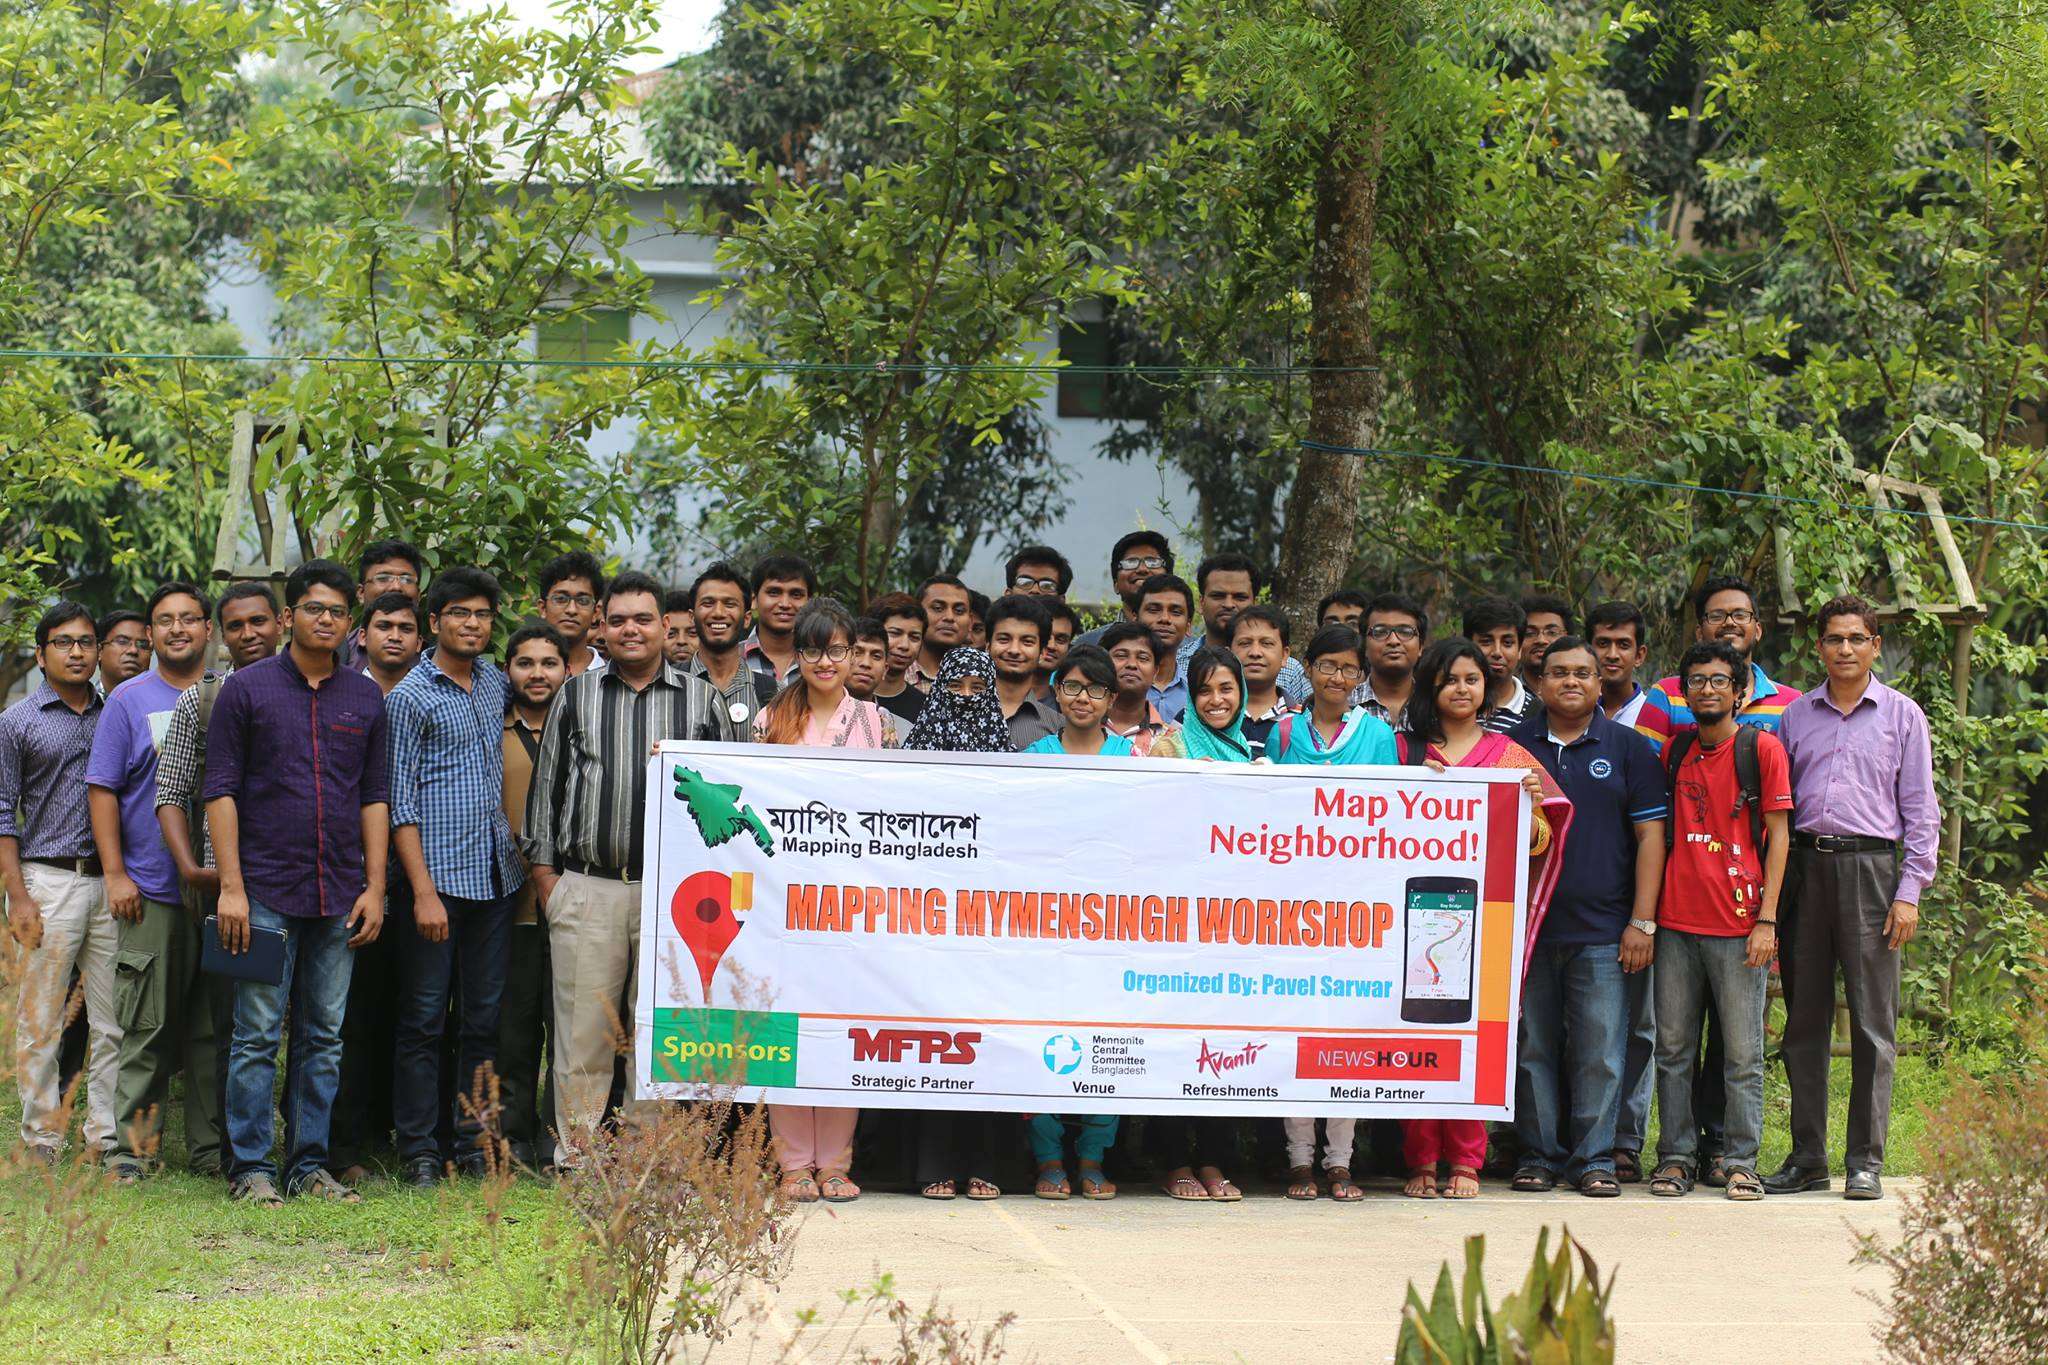 Mapping Bangladesh event